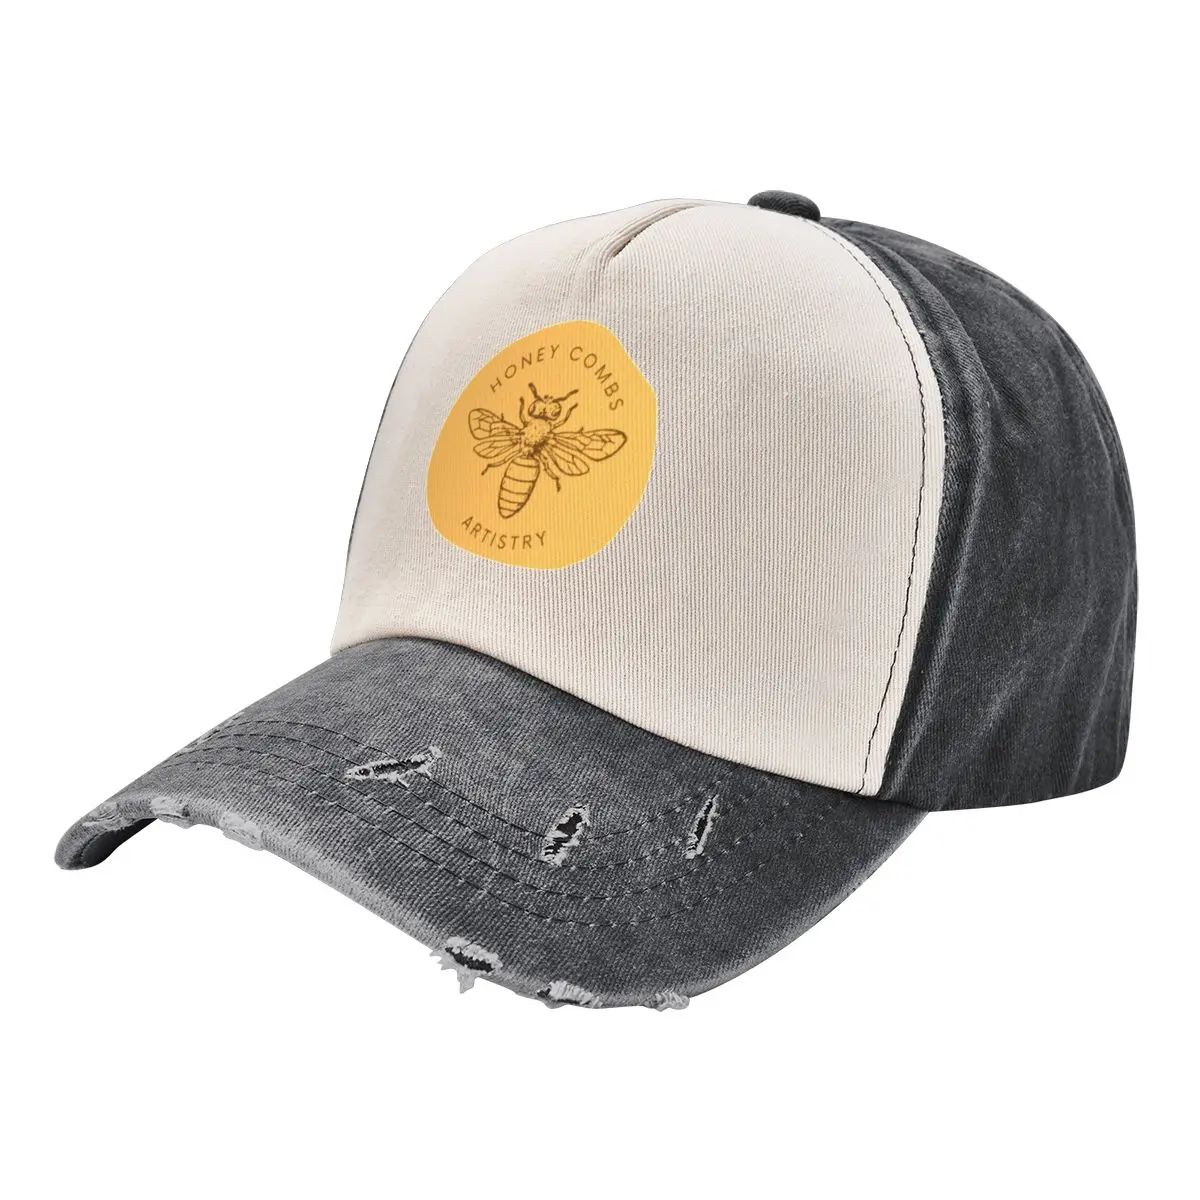 

Honey Combs ArtistryCap Baseball Cap Hat Luxury Brand Sunscreen Kids Hat For Man Women's